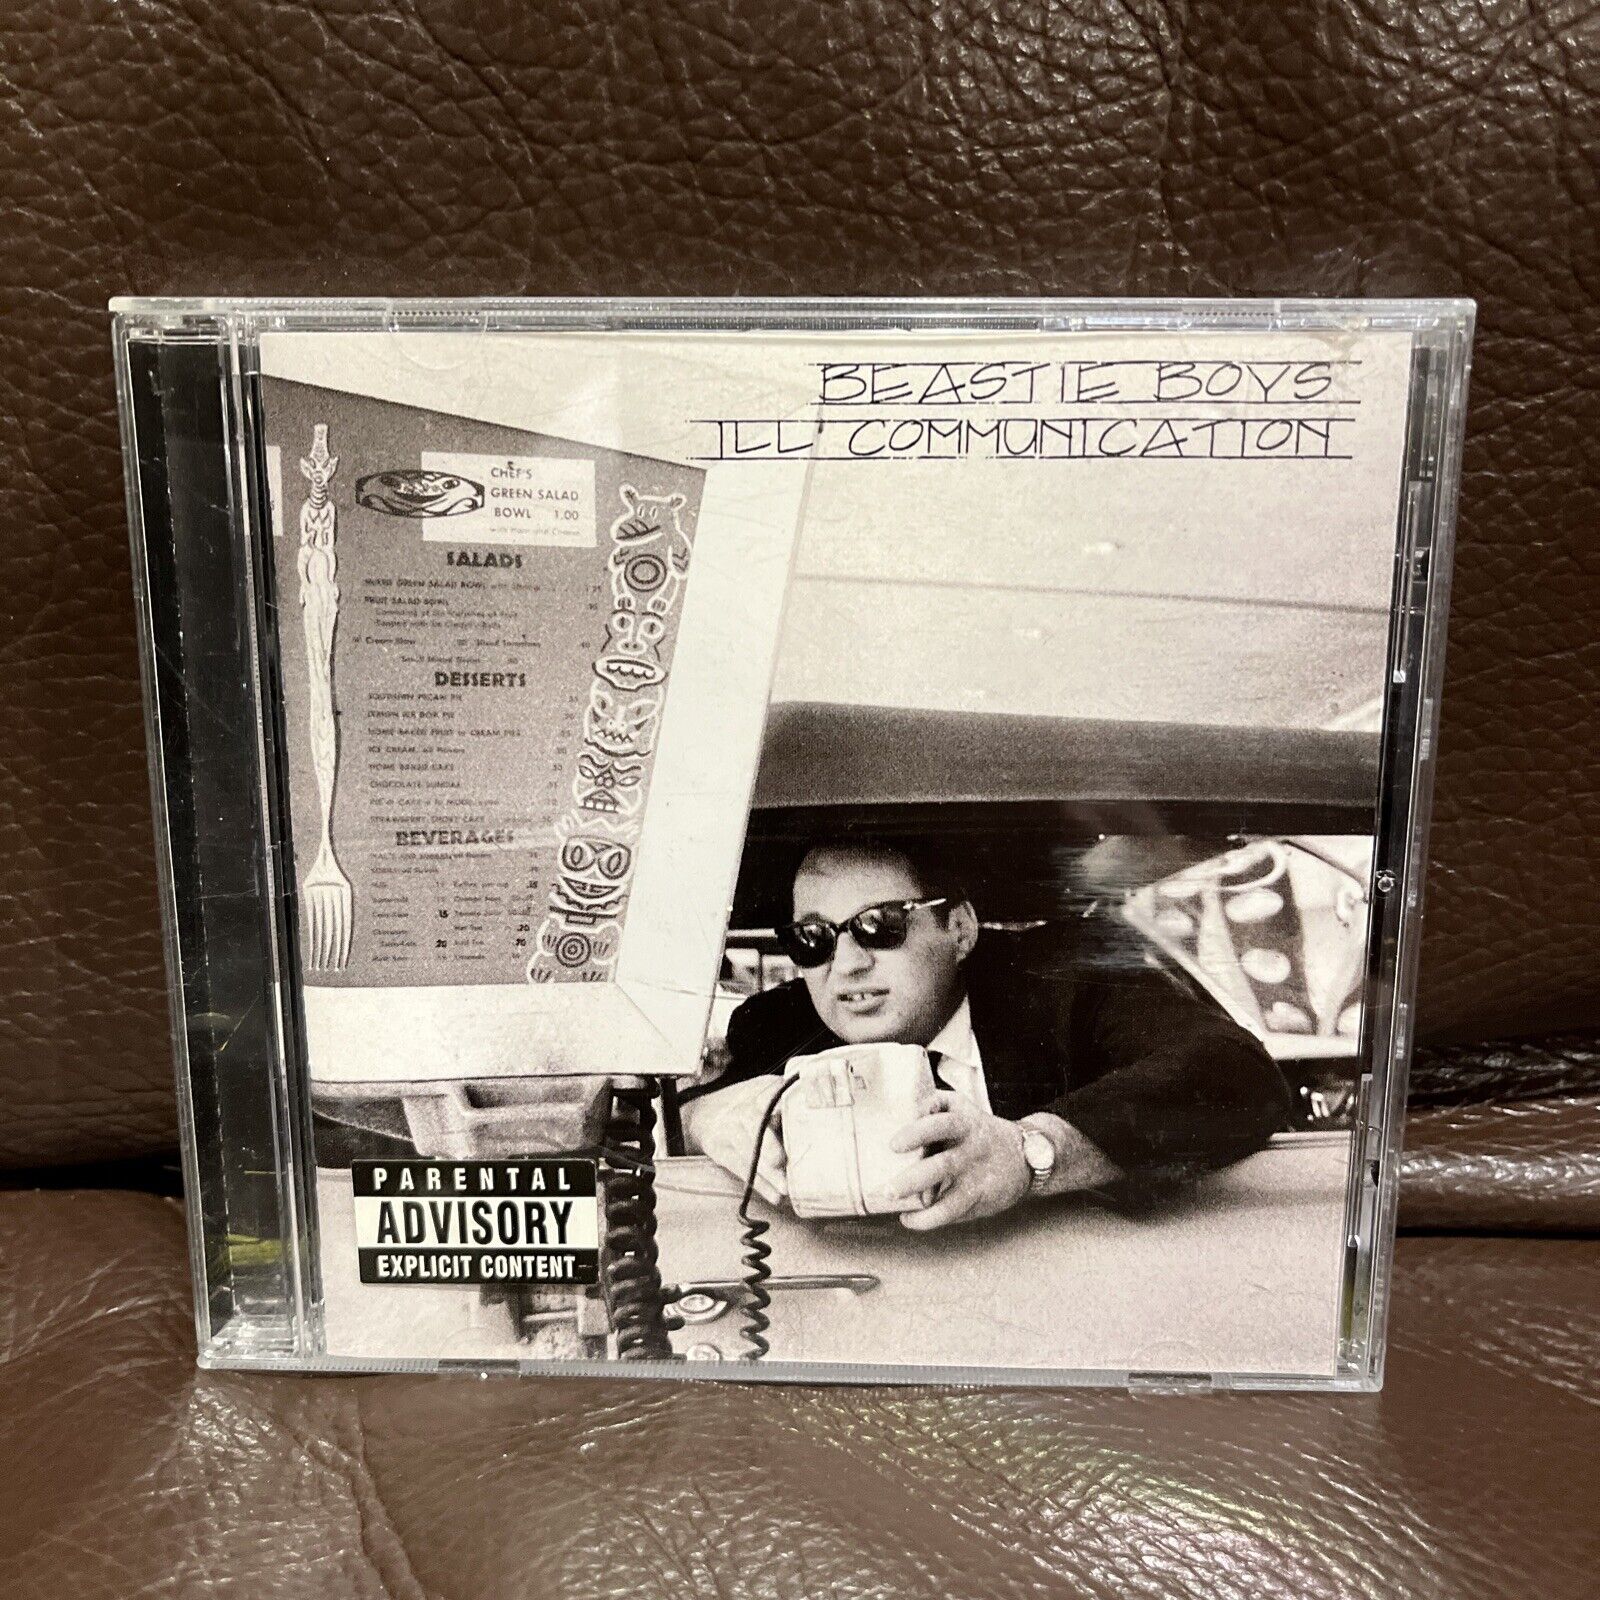 Ill Communication by Beastie Boys (CD, 1994)